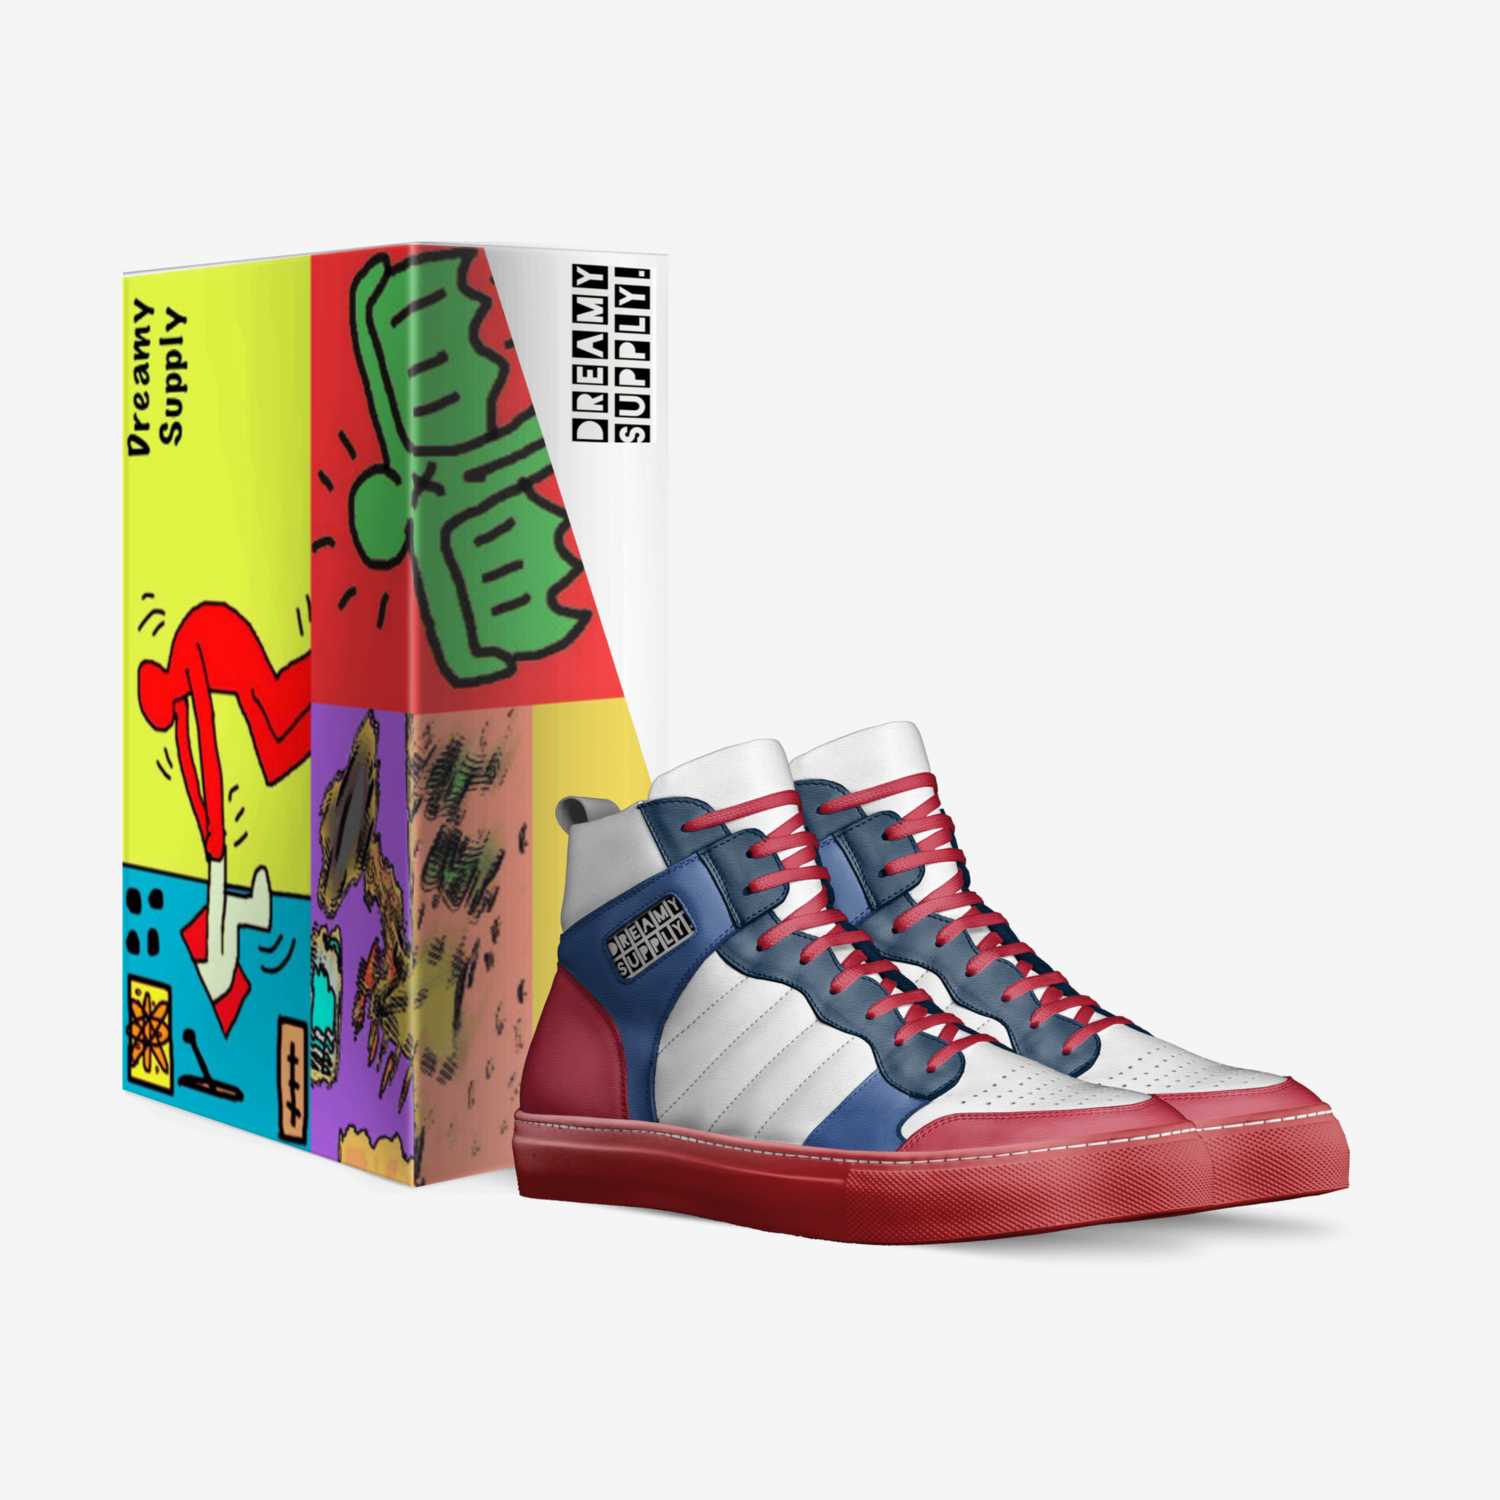 DreamySupply custom made in Italy shoes by Malik Dreamy | Box view